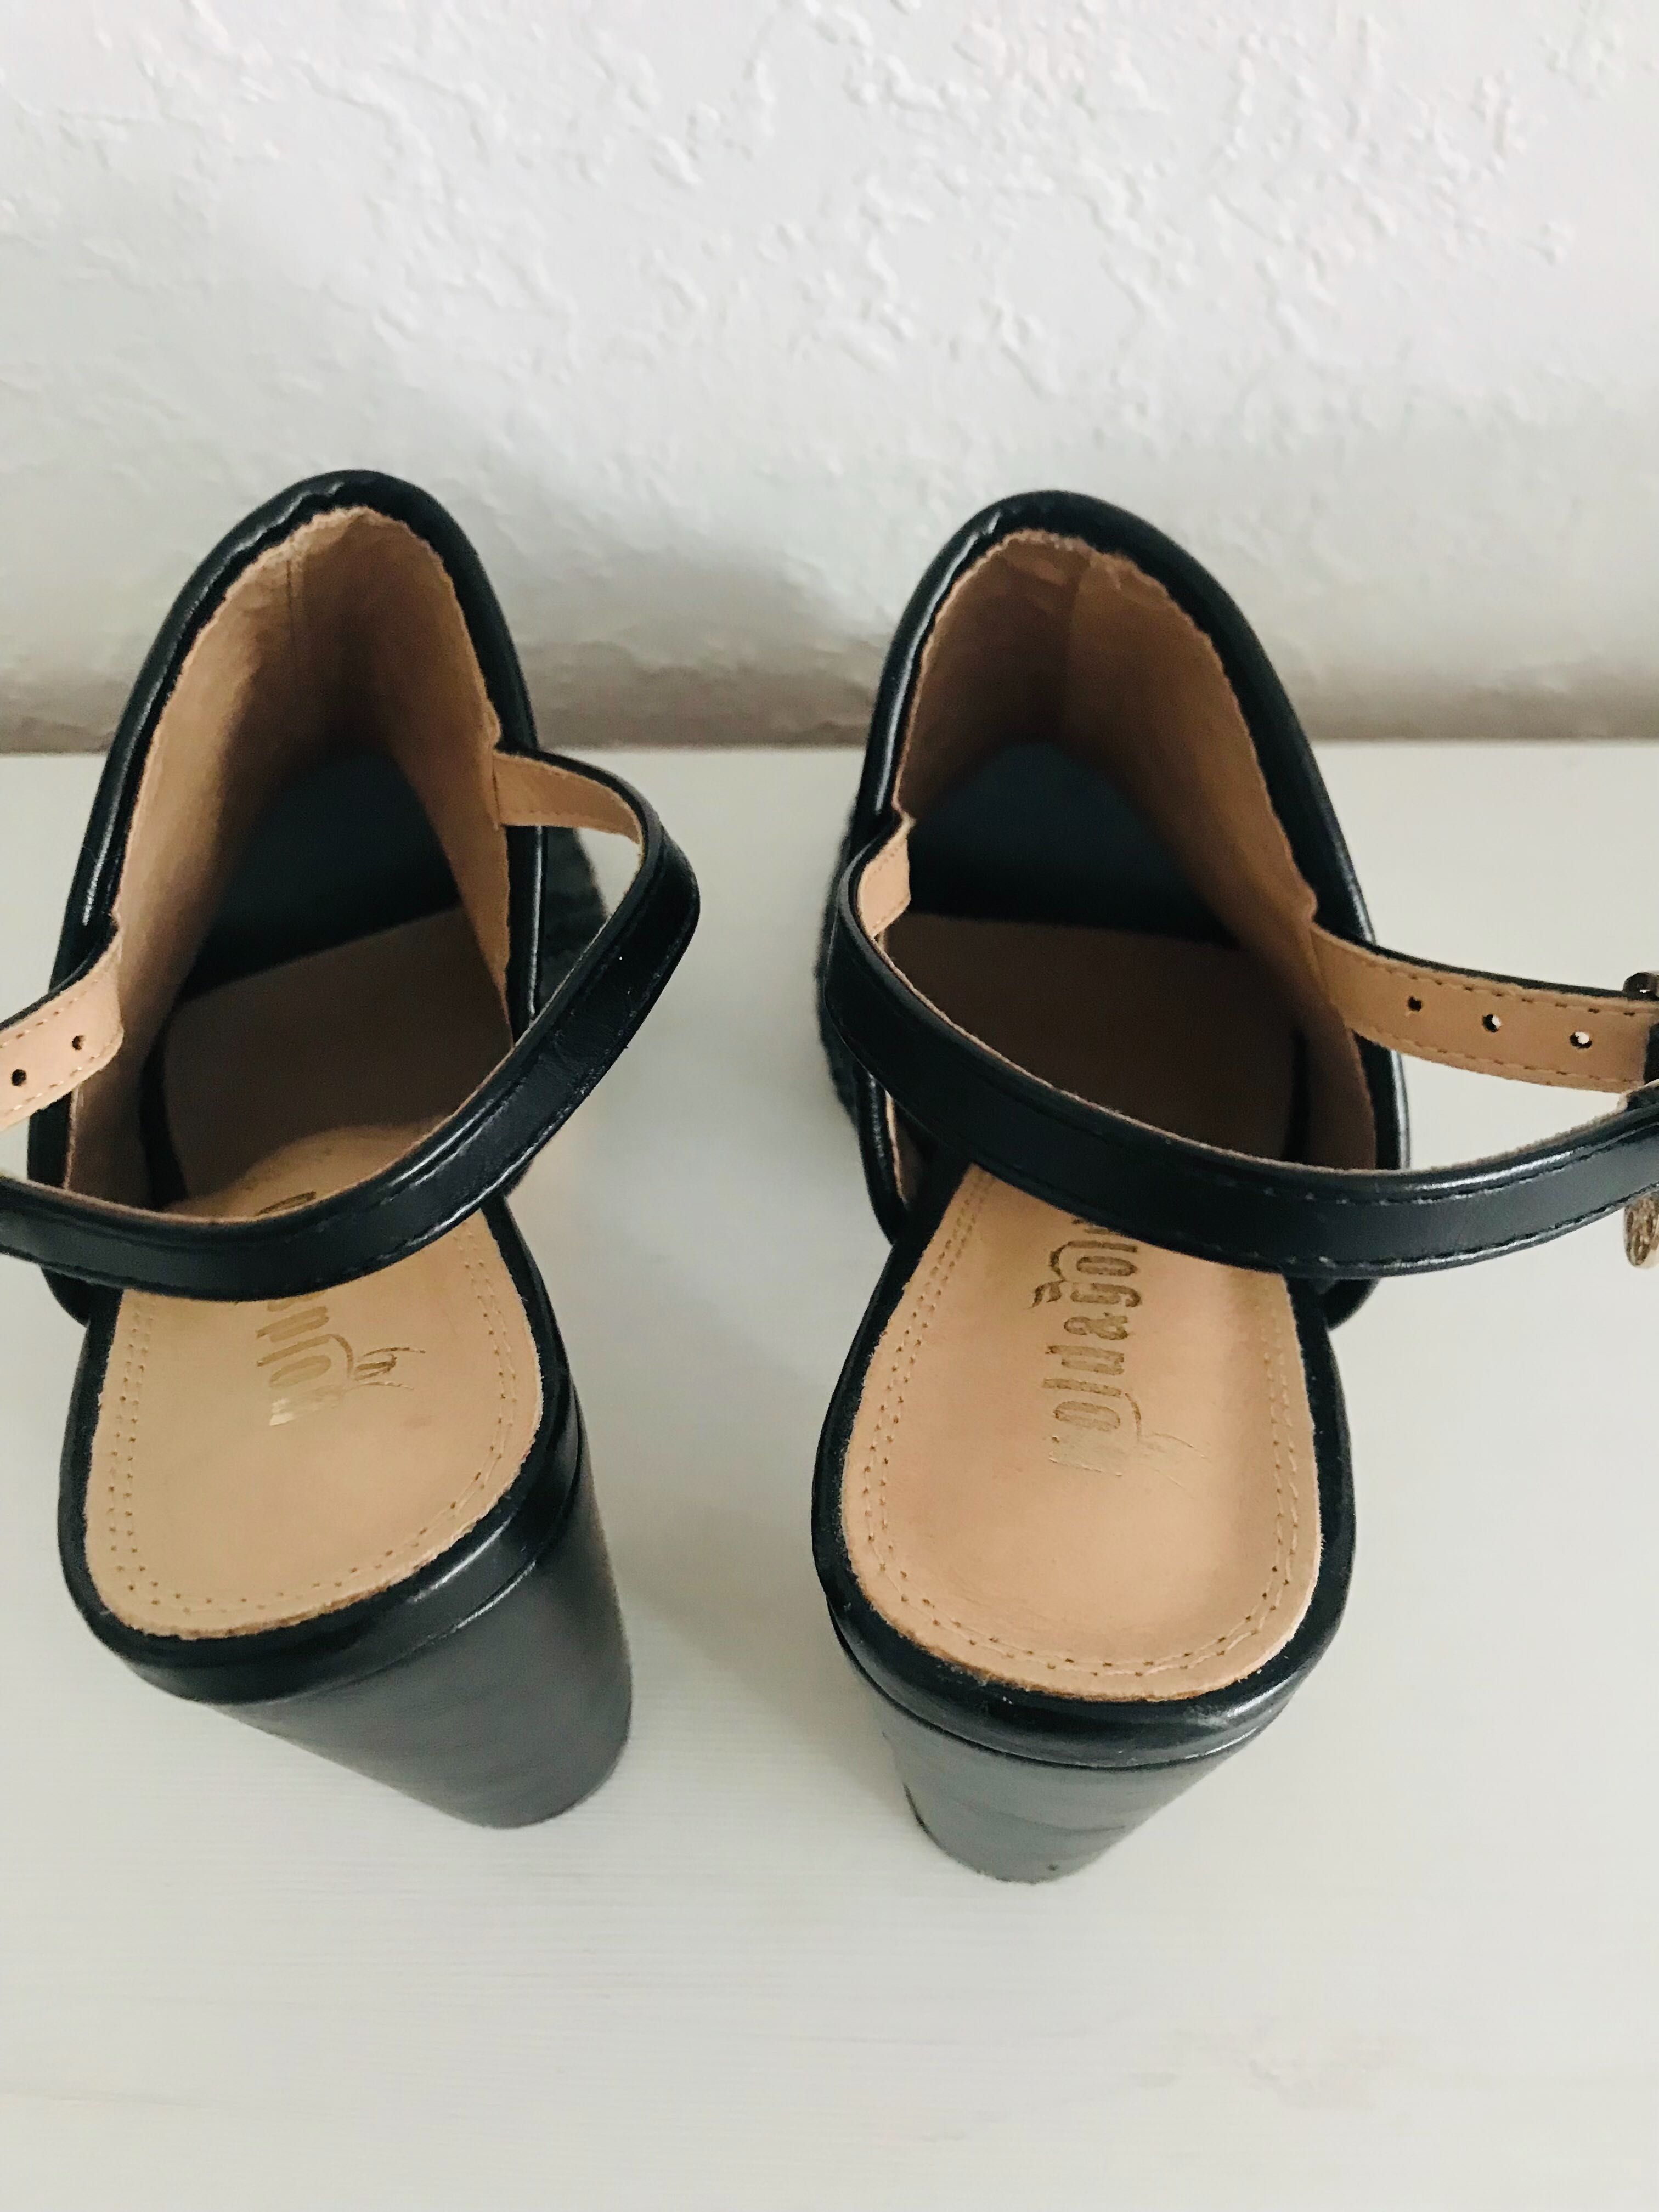 Pantofi/sandale elegante, piele calitate Italia, 39, au costat 160 eur